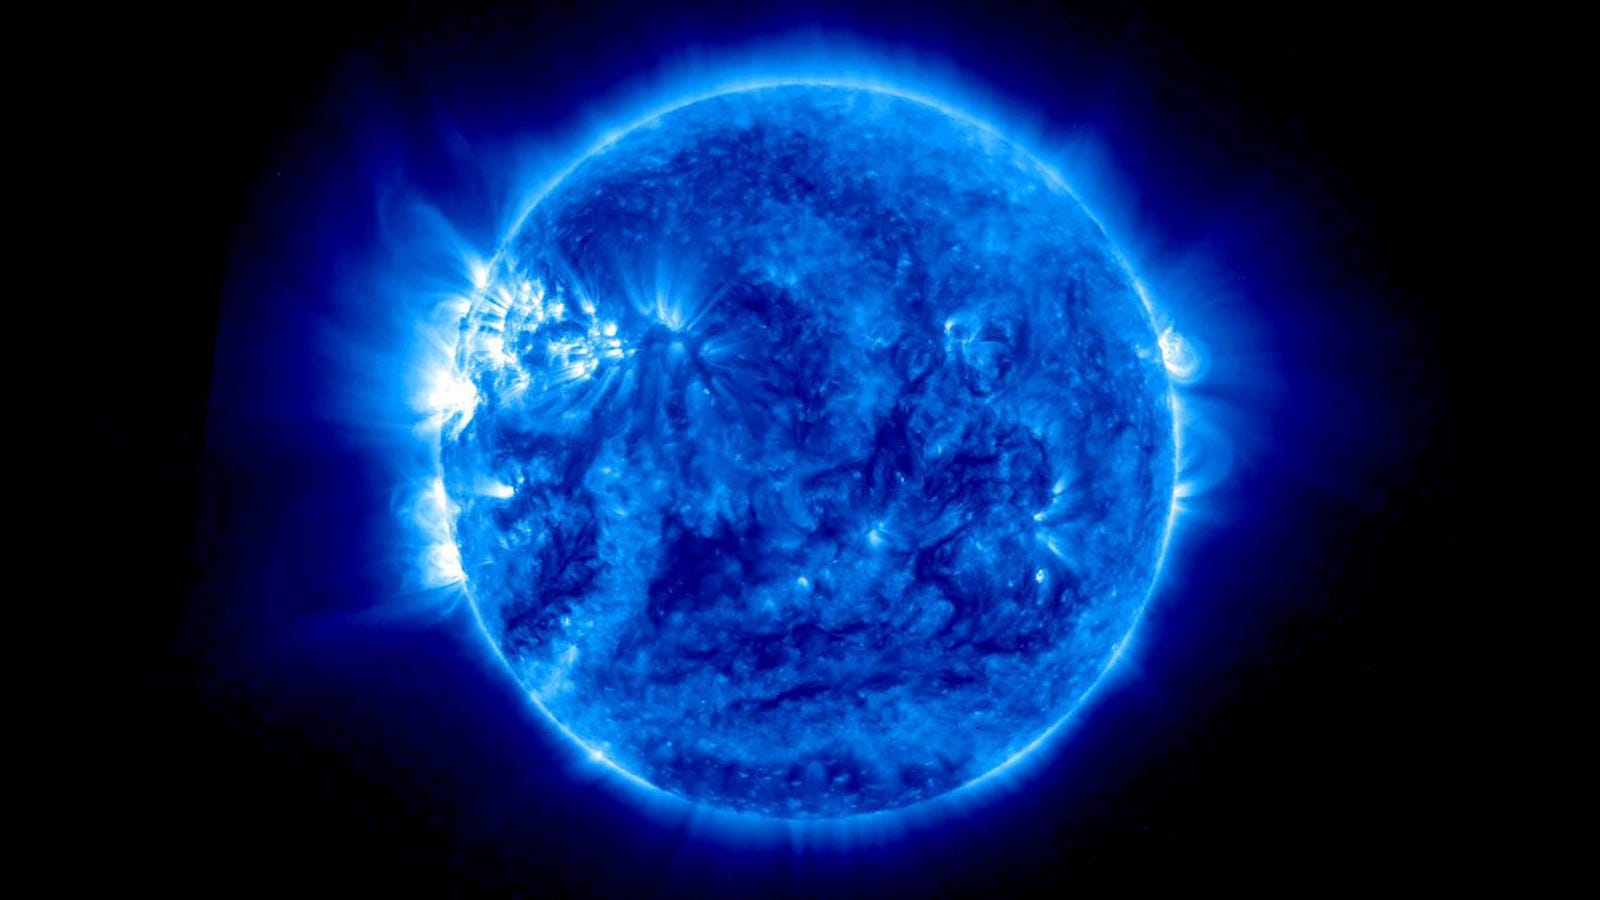 Голубой сверхгигант. Звезда ригель сверхгигант. Голубой сверхгигант звезда. Голубой гипергигант звезда r136a1. Ригель голубой сверхгигант.